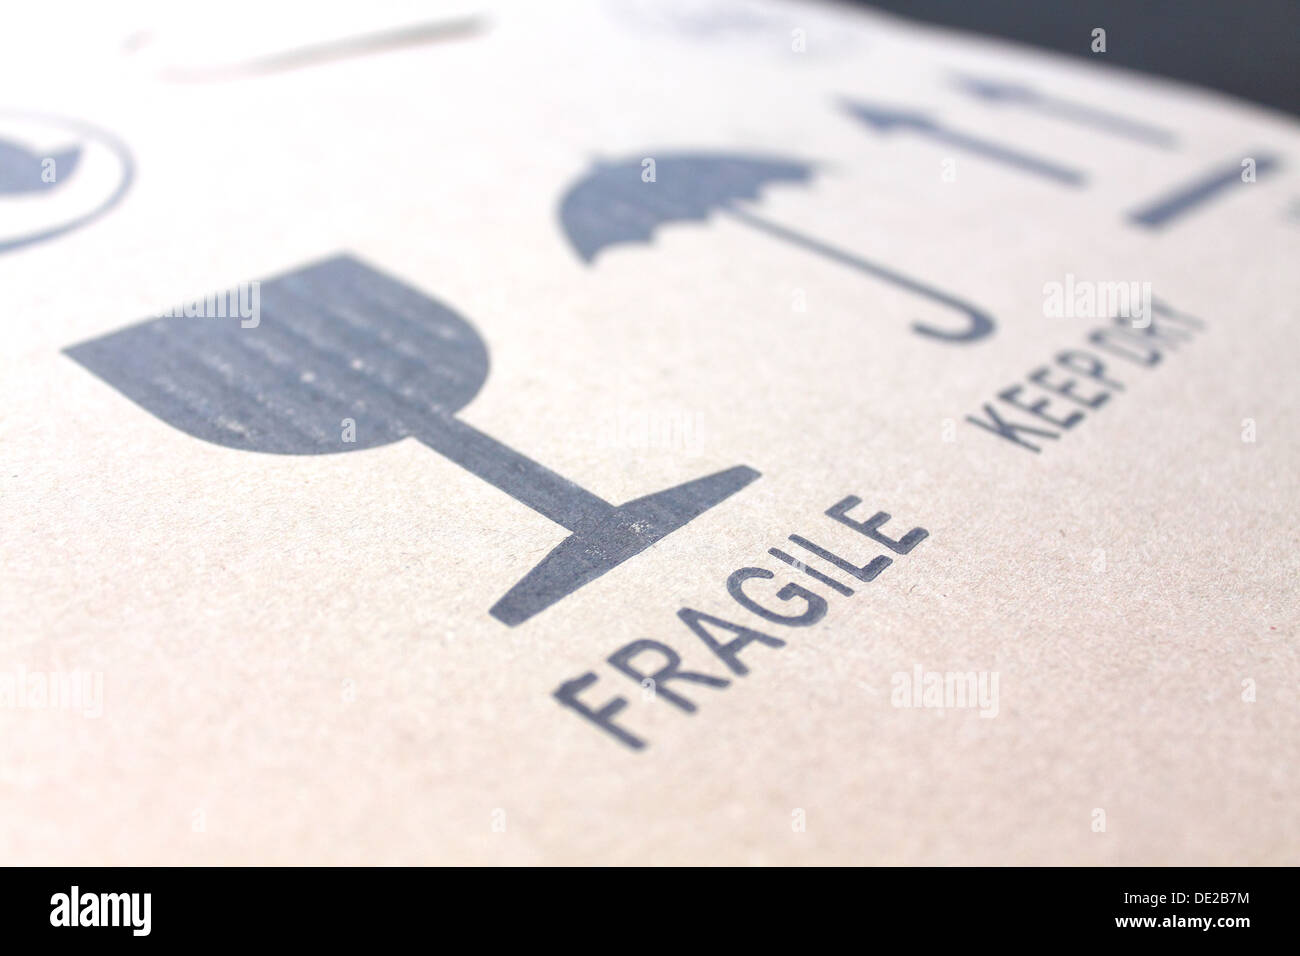 'Fragile' sign on cardboard box Stock Photo